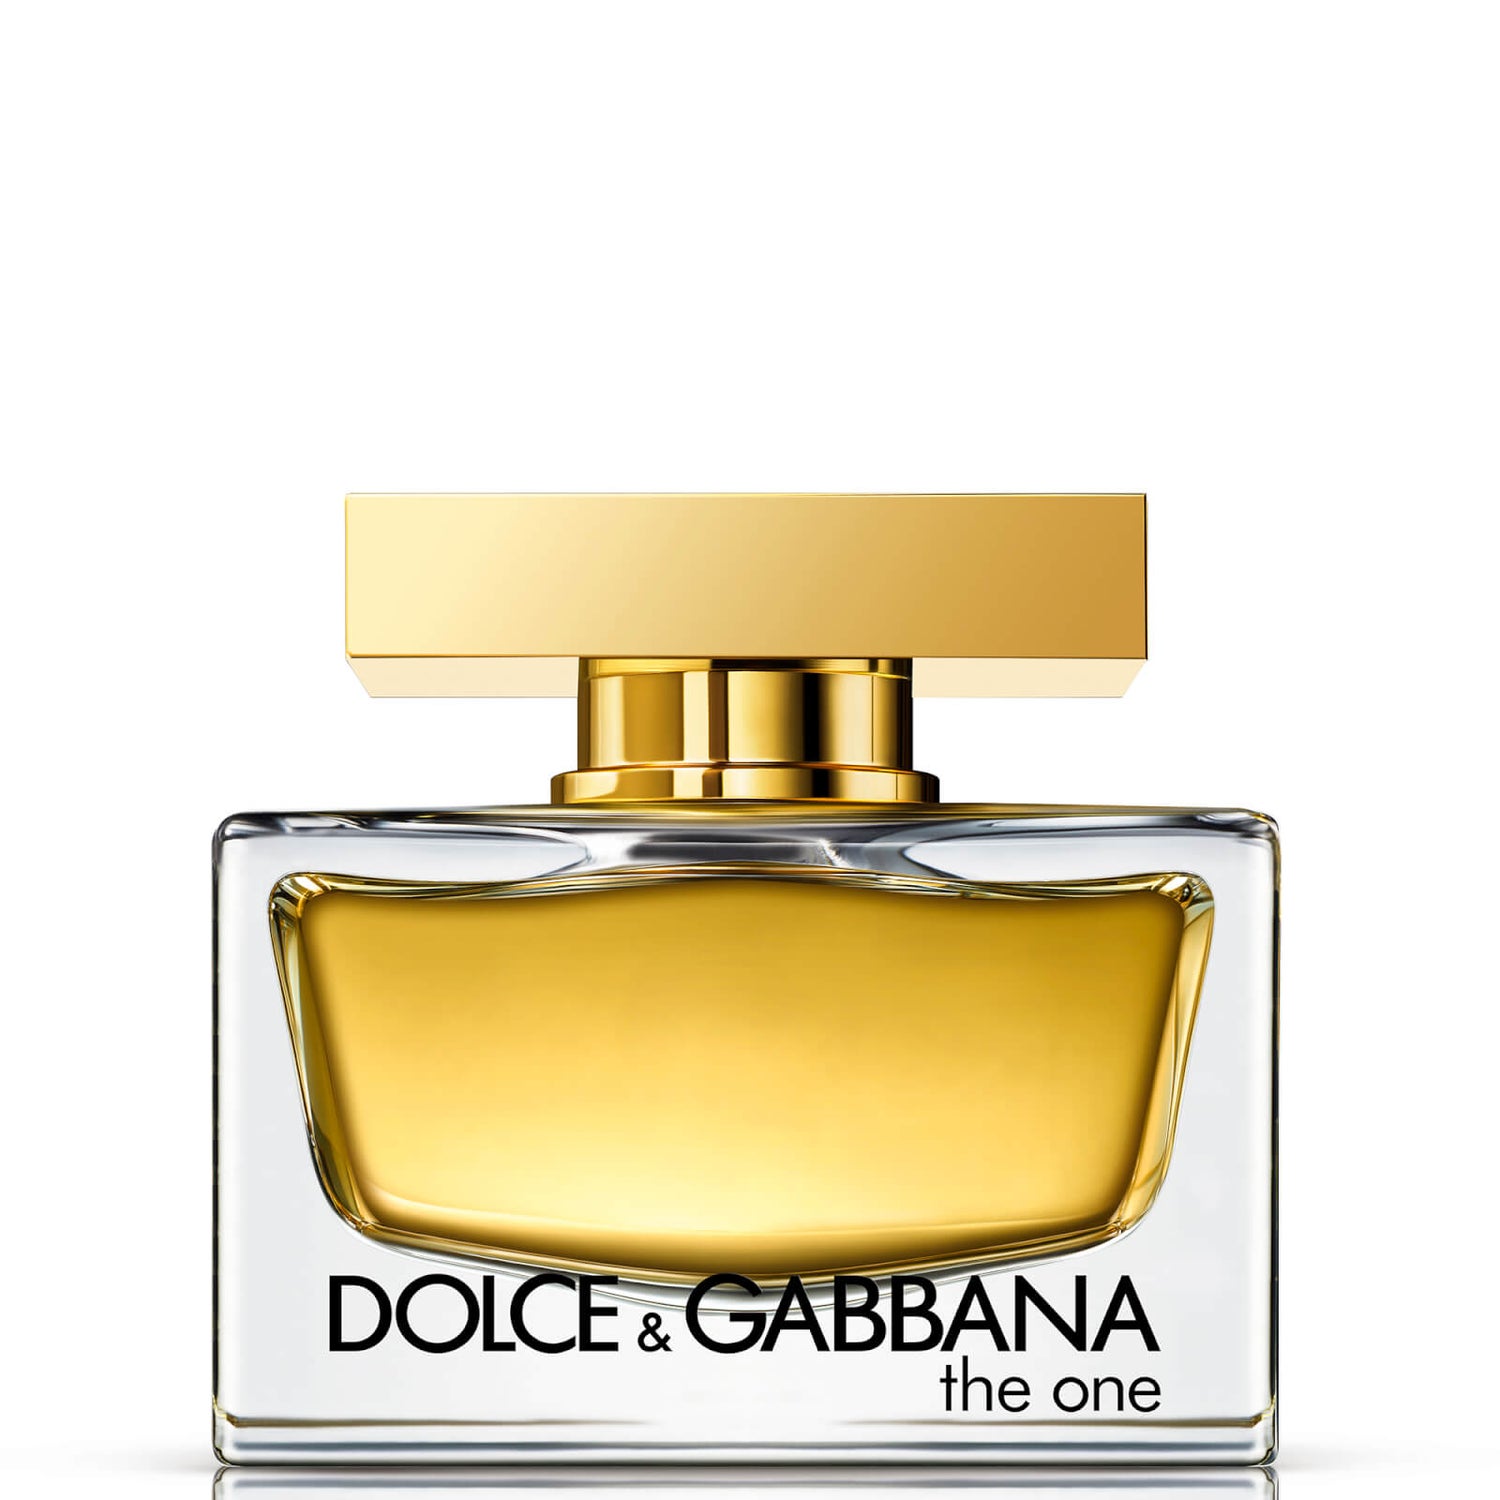 Dolce&Gabbana The One Eau de Parfum Spray 75ml - LOOKFANTASTIC